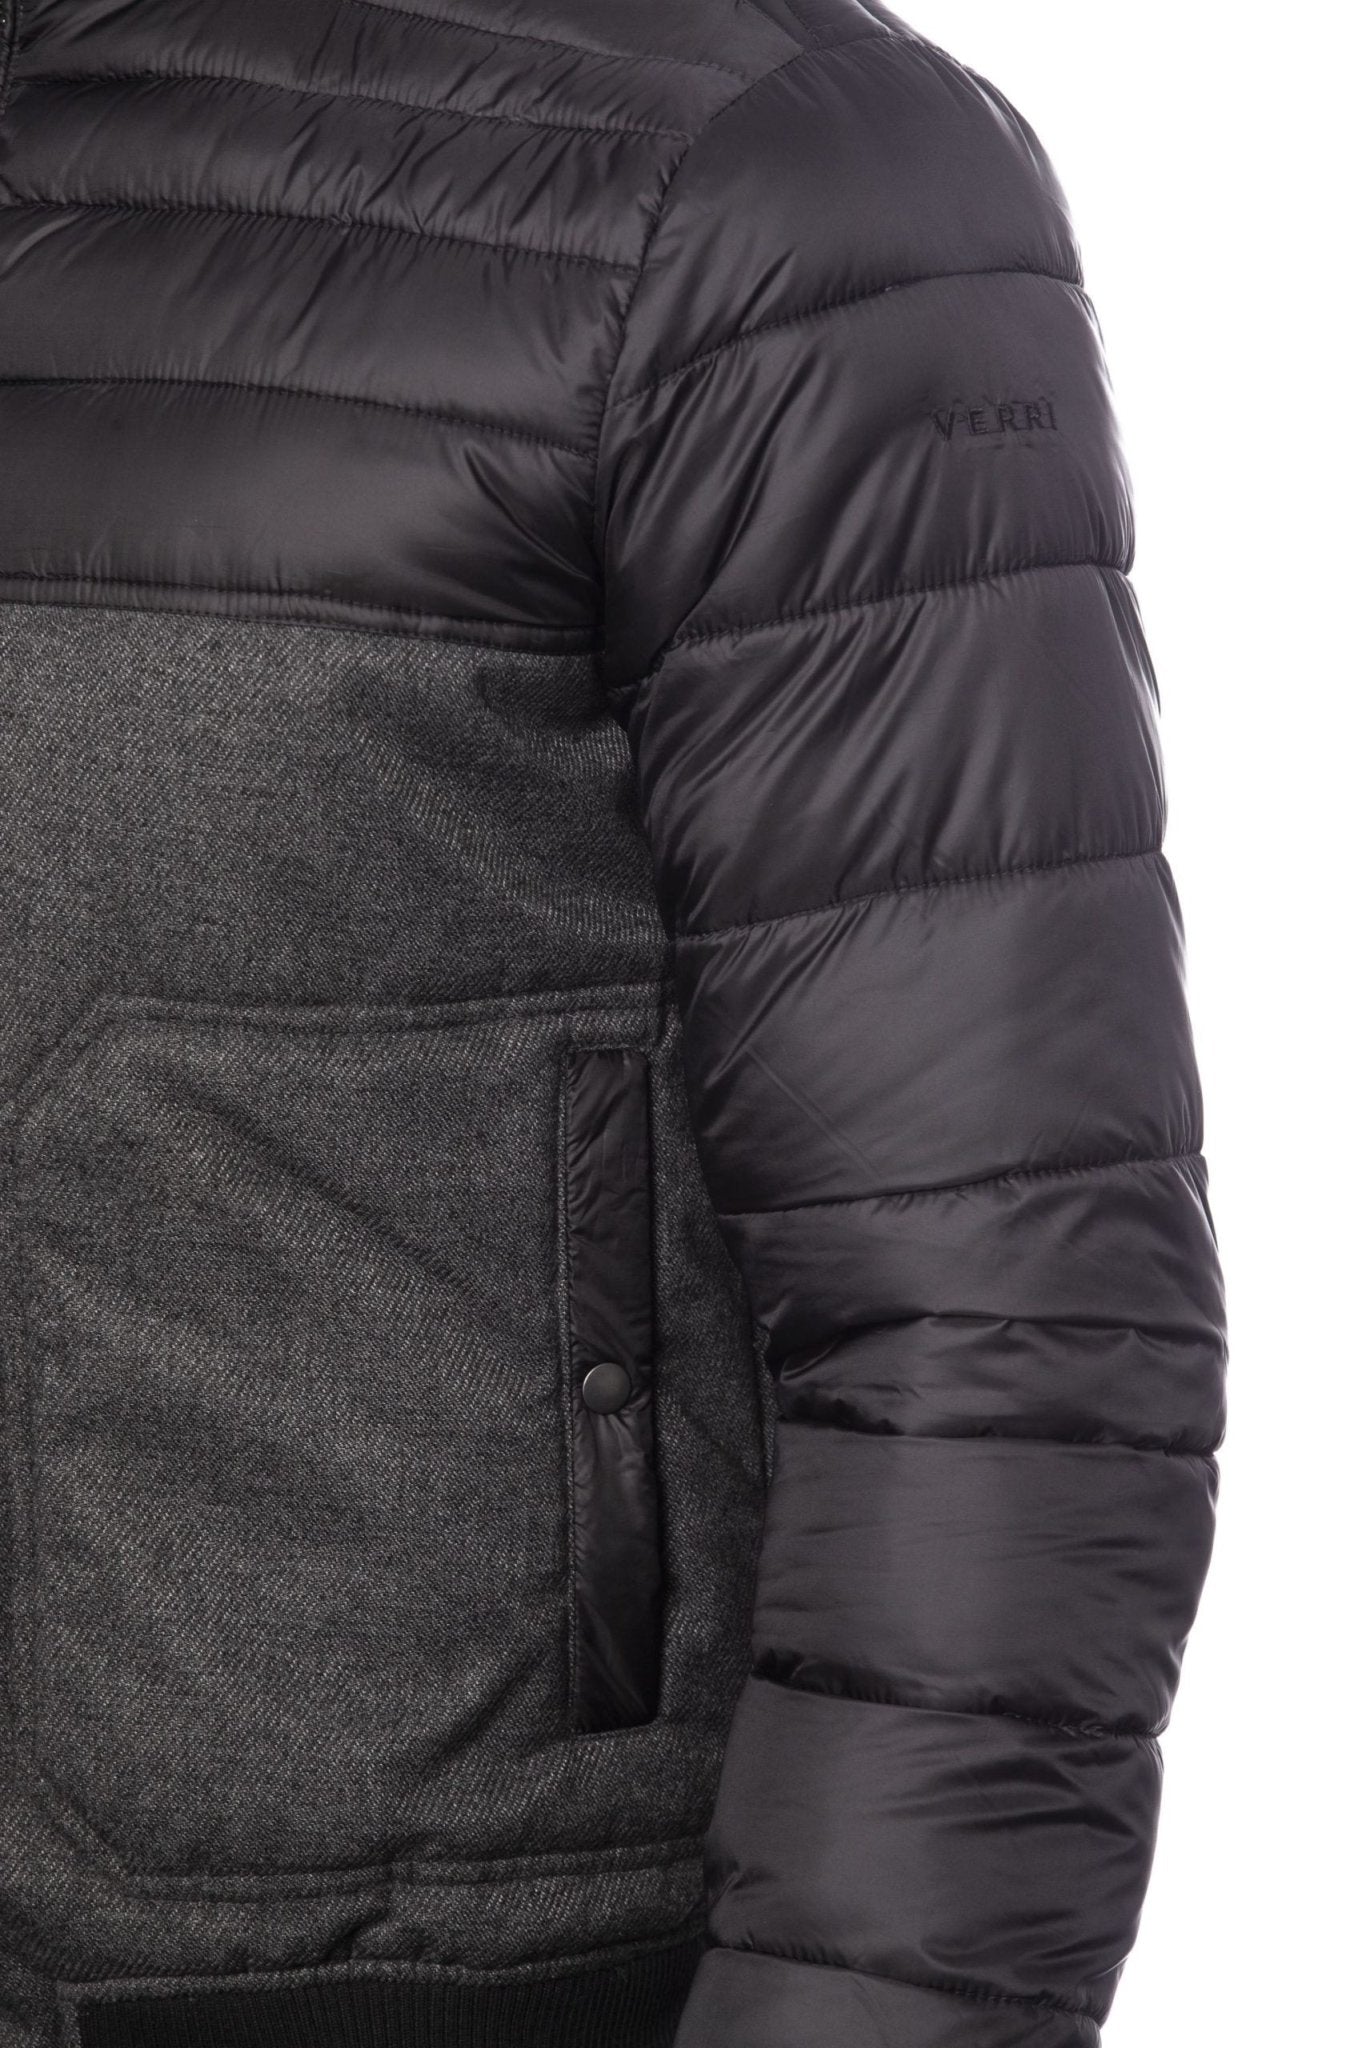 Verri Gray Polyester Jacket - Fizigo